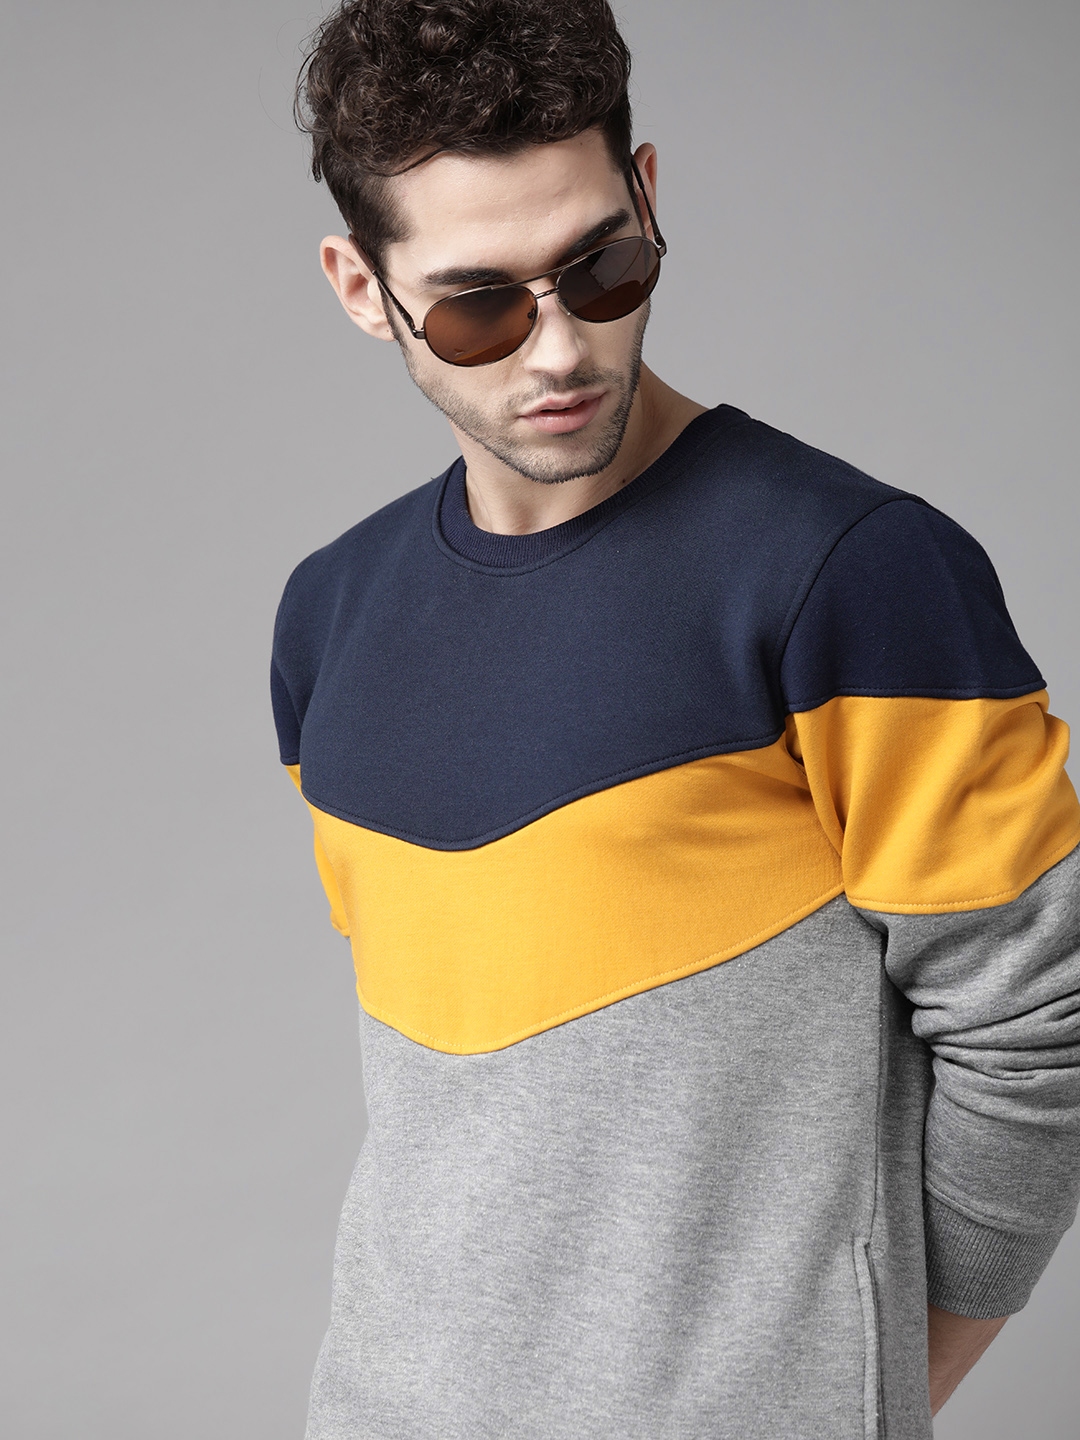 Buy Roadster Men Navy Blue & Mustard Yellow Colourblocked Sweatshirt ...